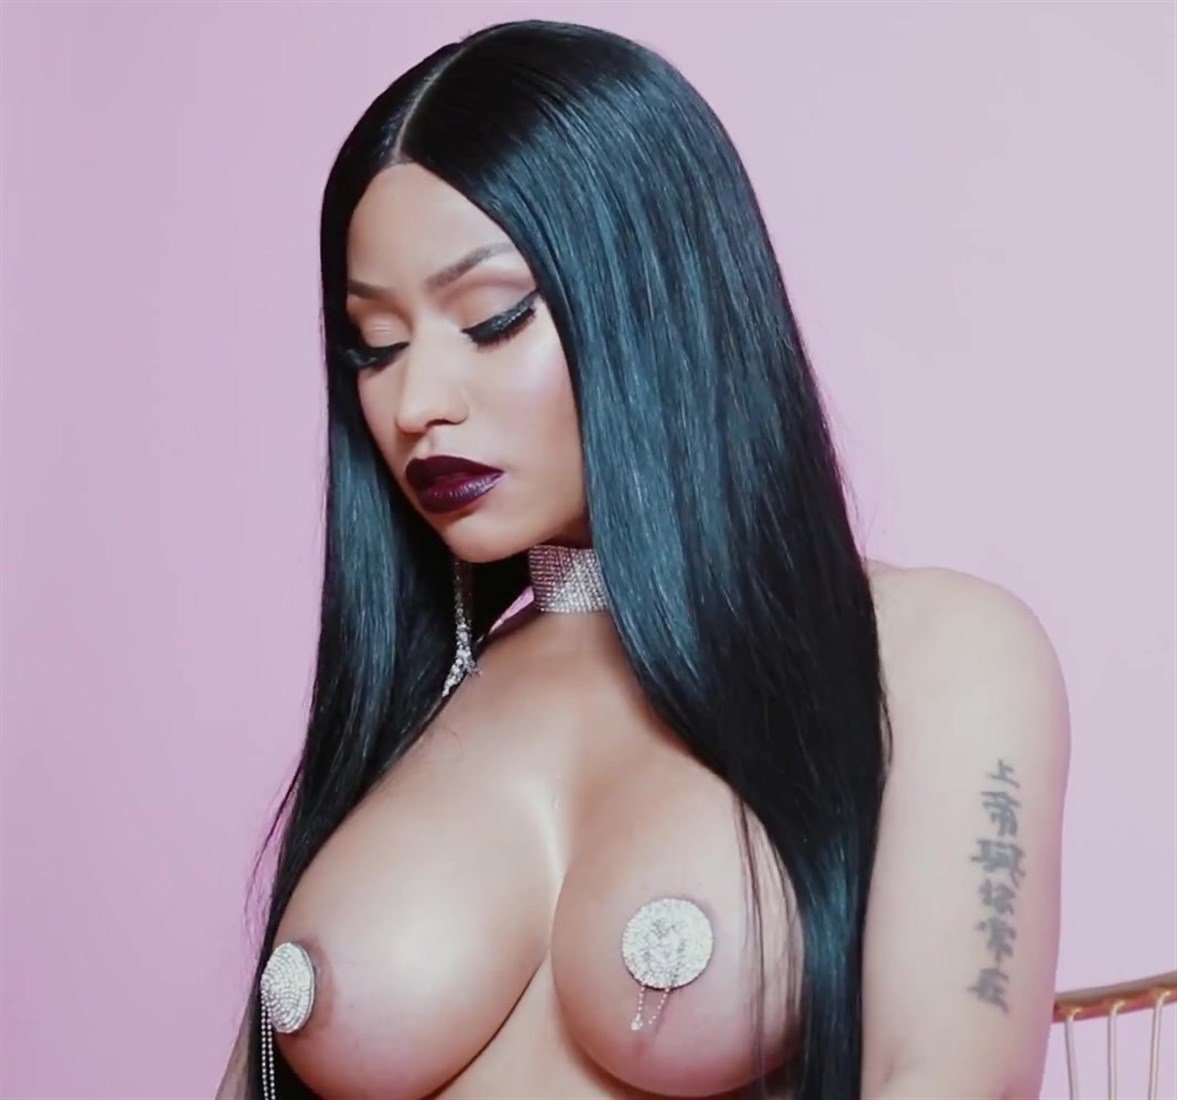 Nicki Minaj Nude Outtake Behind-The-Scenes Of Paper Magazine Photo Shoot.